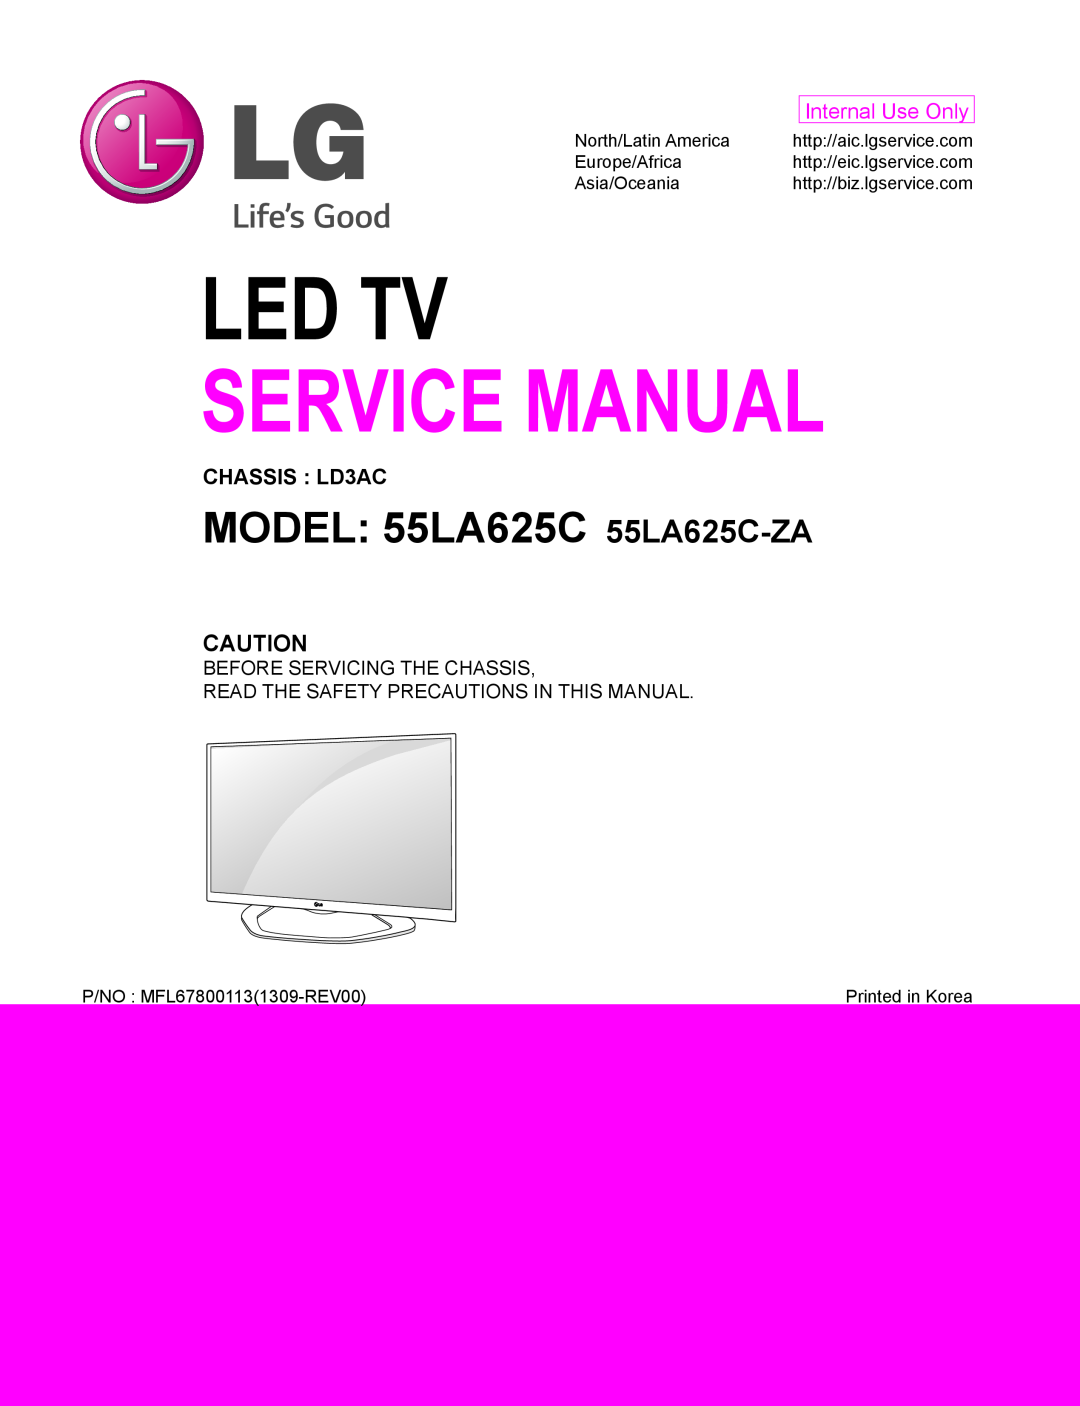 LG Electronics service manual Led Tv, Service Manual, MODEL 55LA625C 55LA625C-ZA, Internal Use Only 